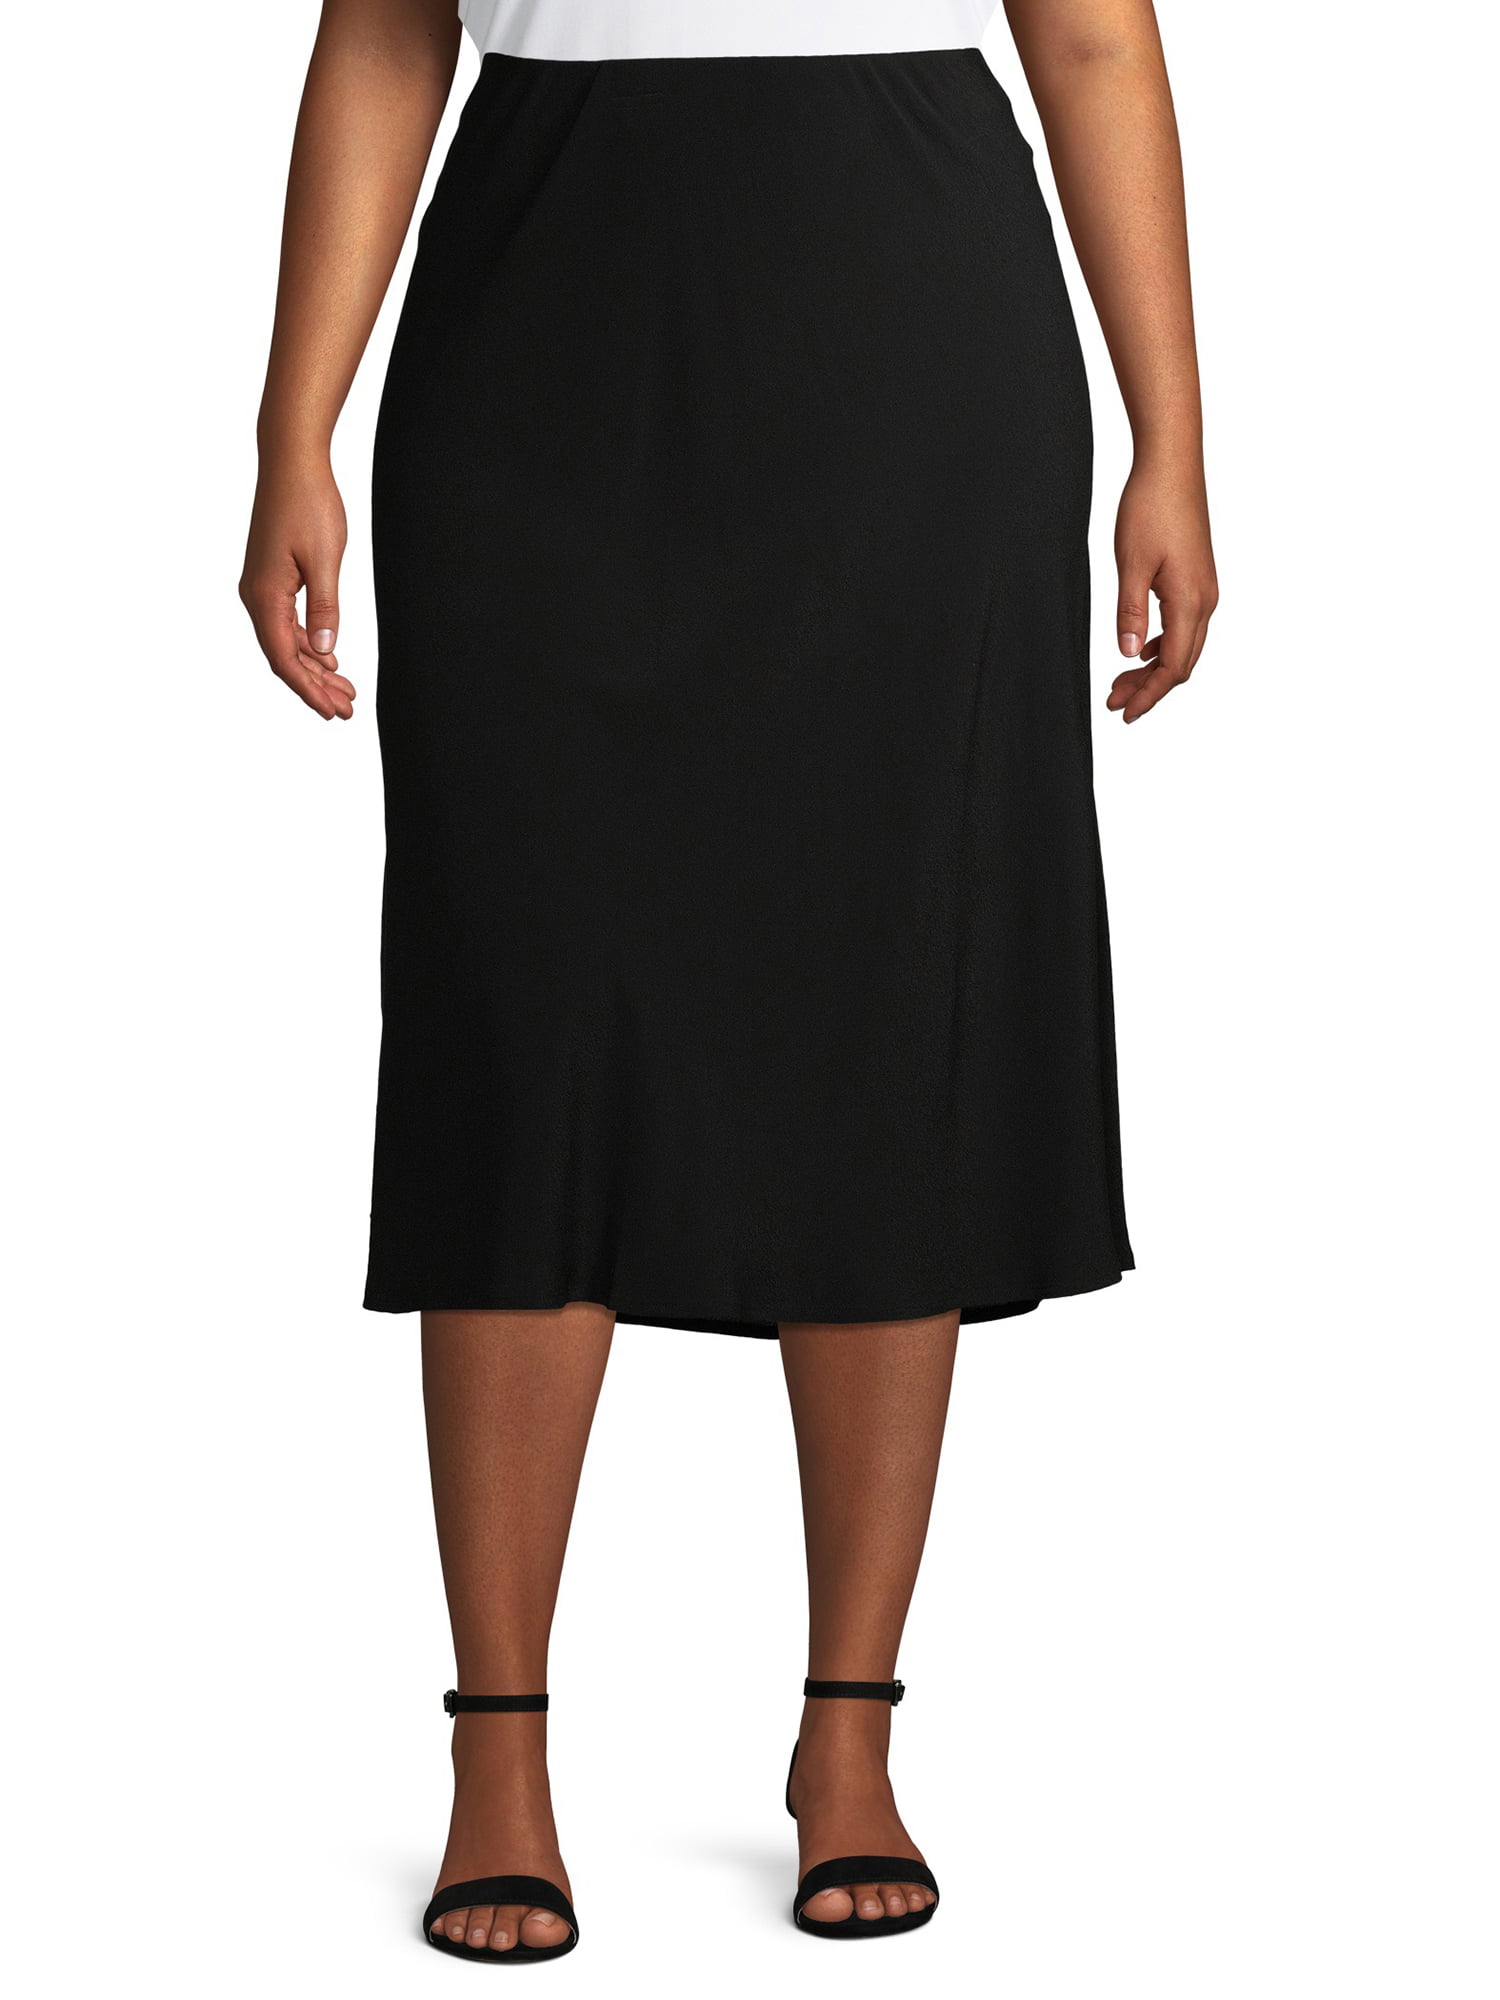 Terra & Sky Women's Plus Size Solid Slip Skirt - Walmart.com